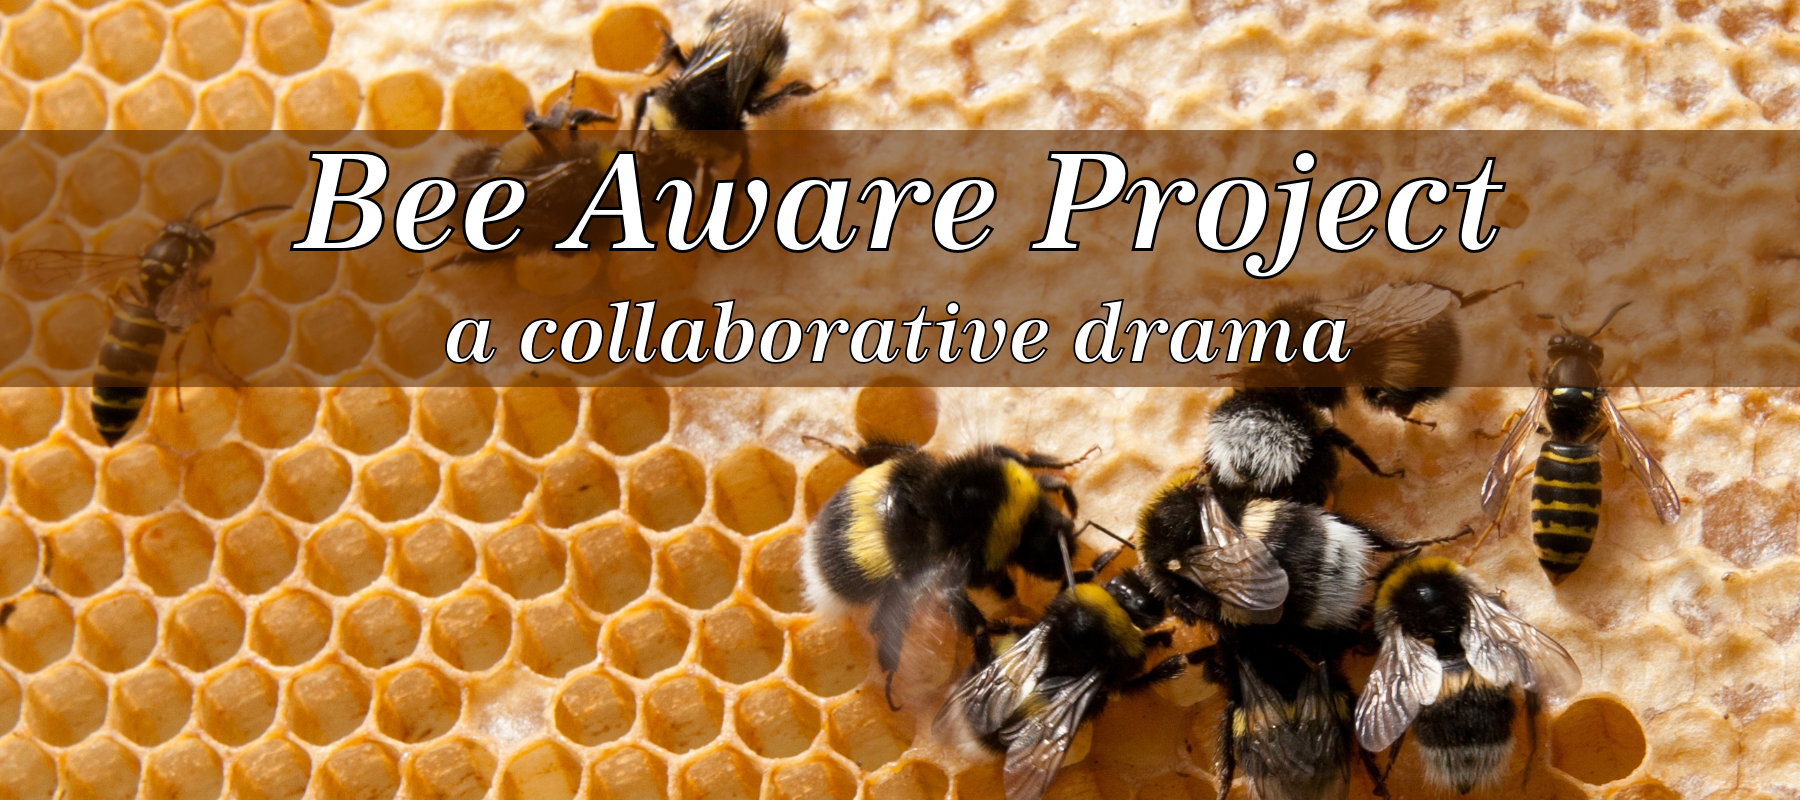 Bee Aware Project, a collaborative drama